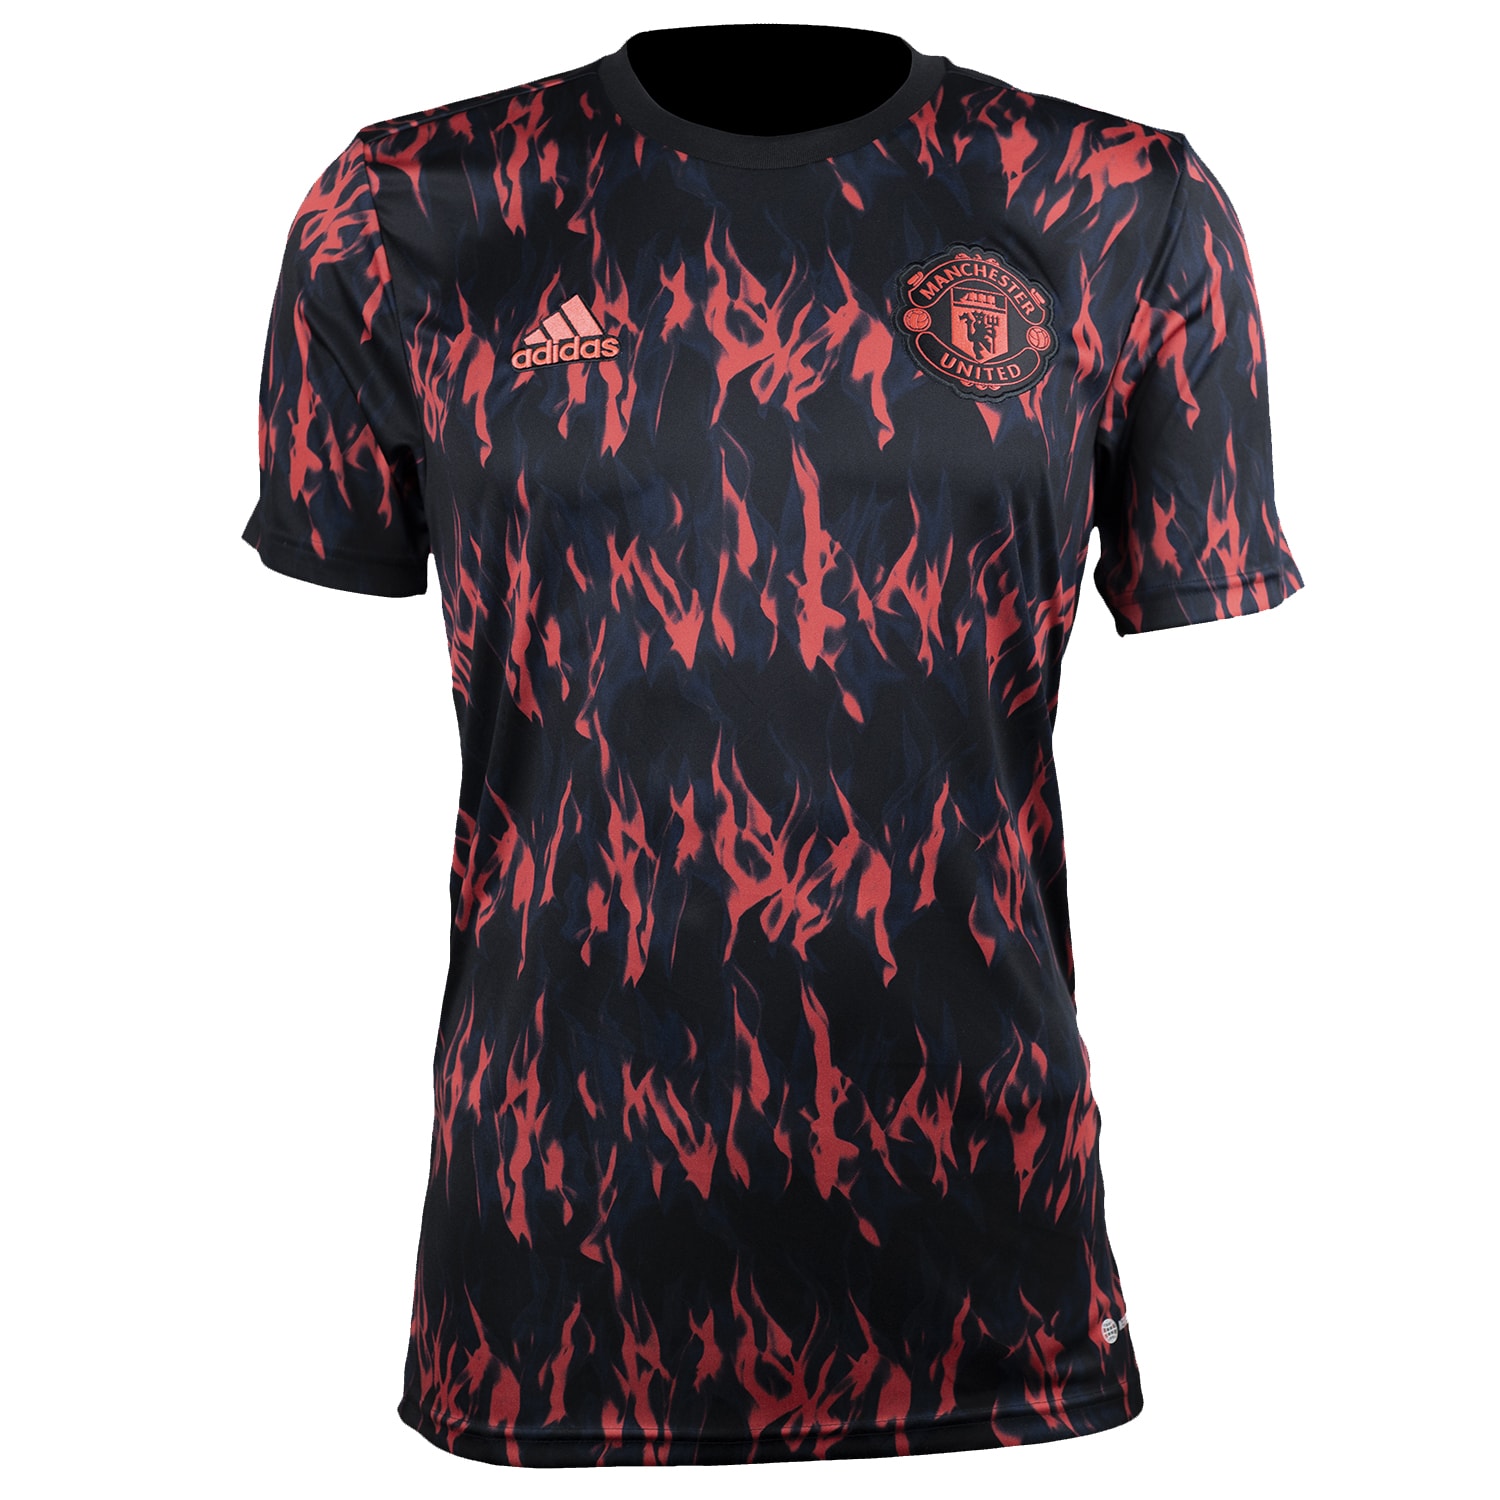 exegese Magistraat Verborgen adidas Manchester United Pre-match Top - Black/Shock Red - SoccerPro